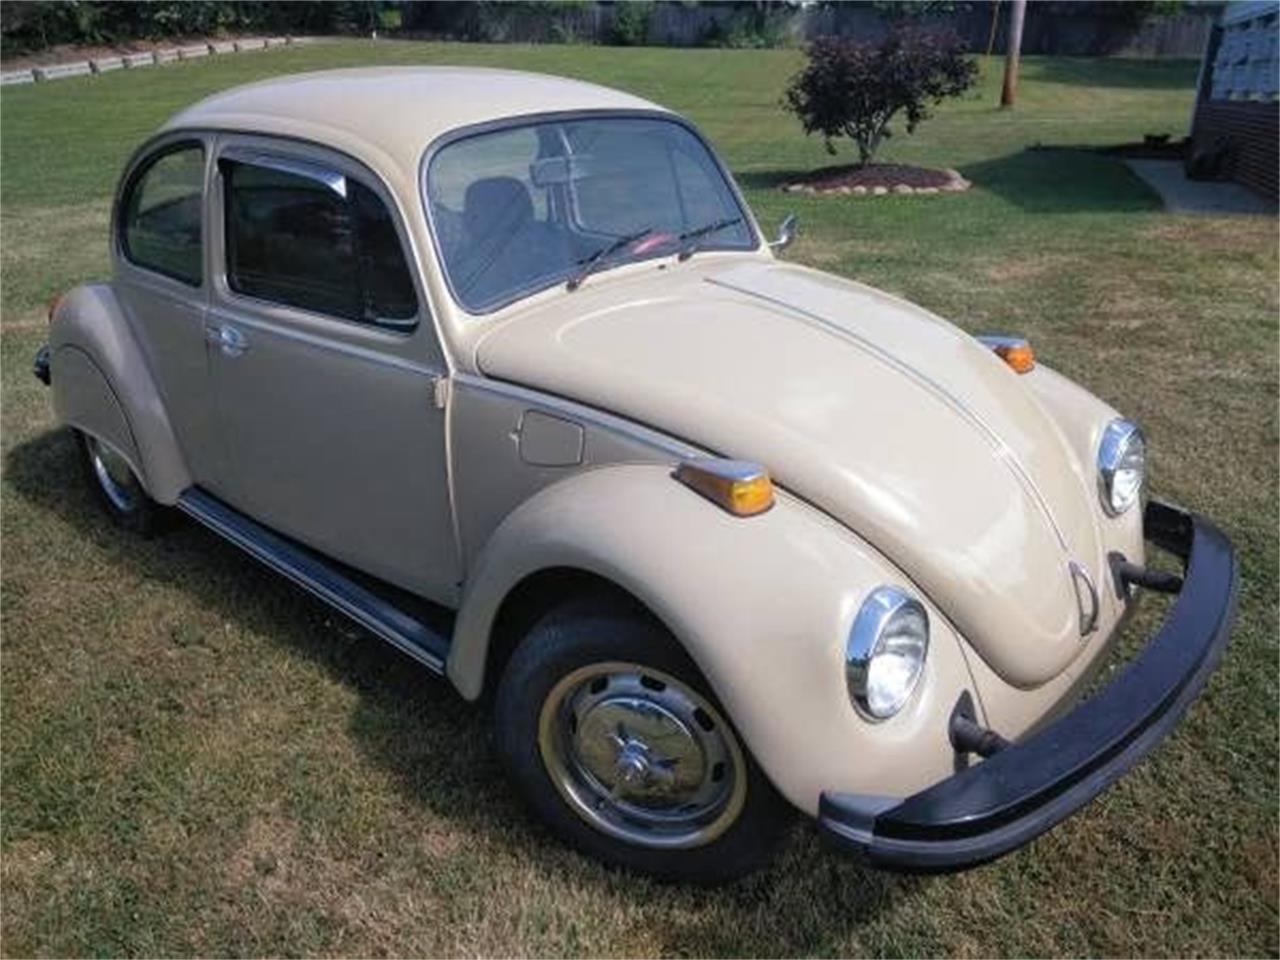 1974 Volkswagen Beetle for sale in Cadillac, MI